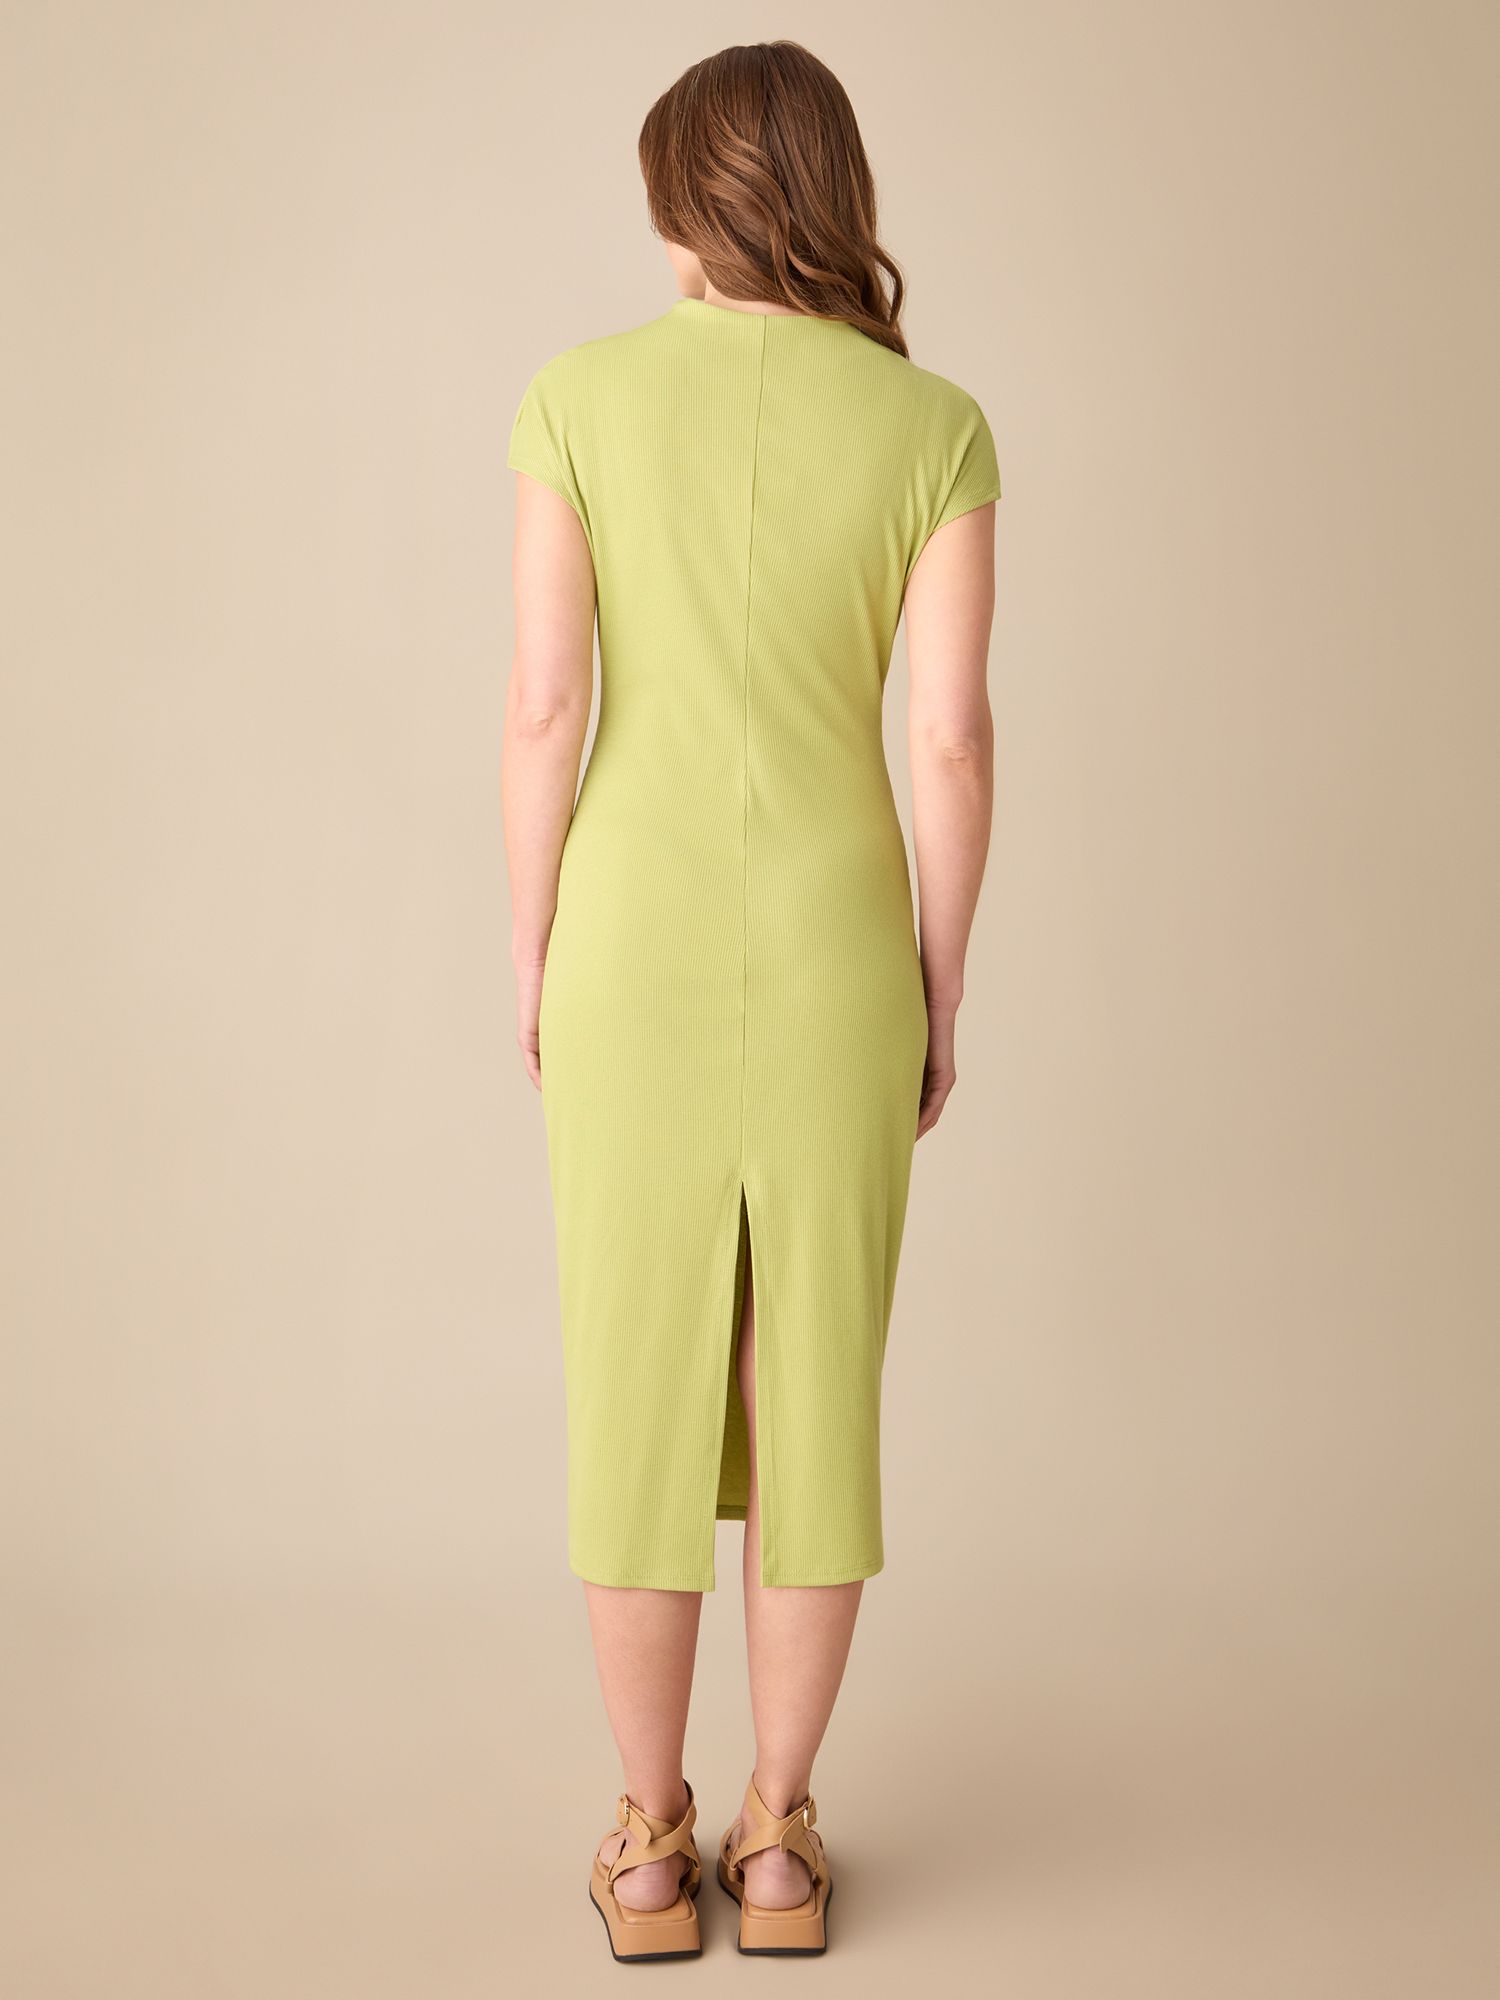 Ro&Zo Petite Narrow Rib Knit Midi Dress, Green, 8